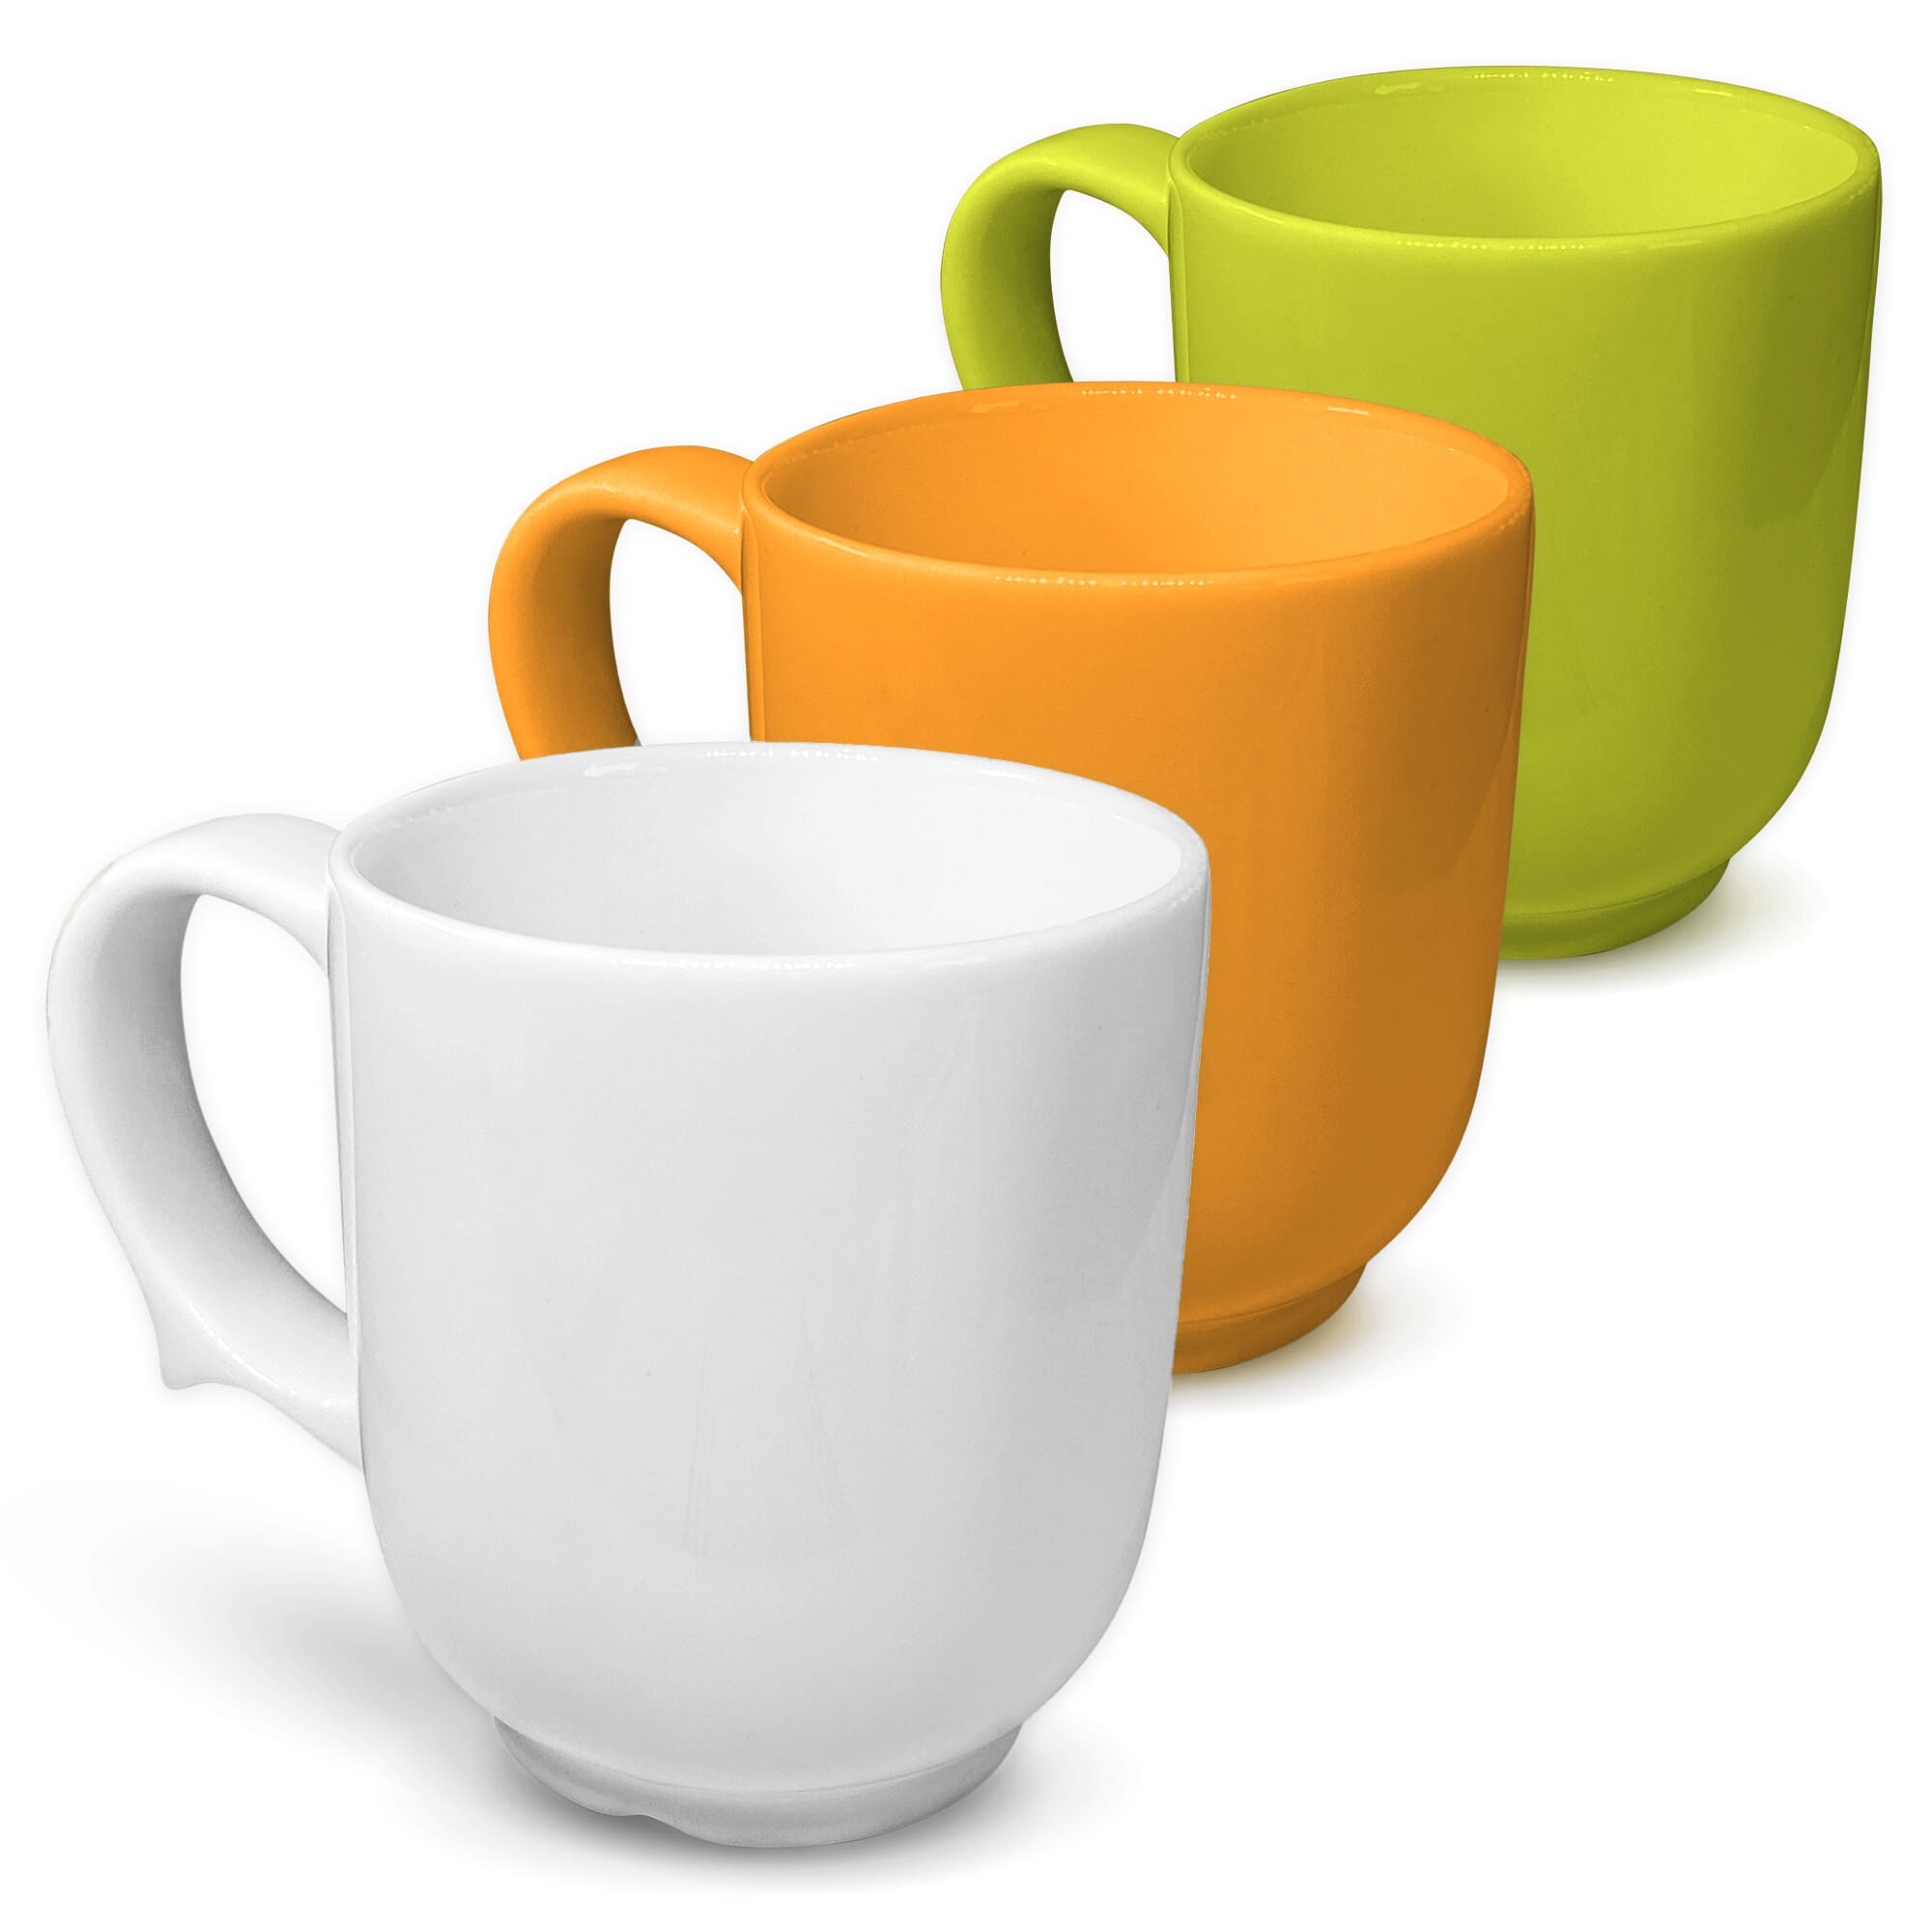 https://images.essentialaids.com/essentialaids/productImages/d/i/dignity_one_handled_mug.jpg?profile=square